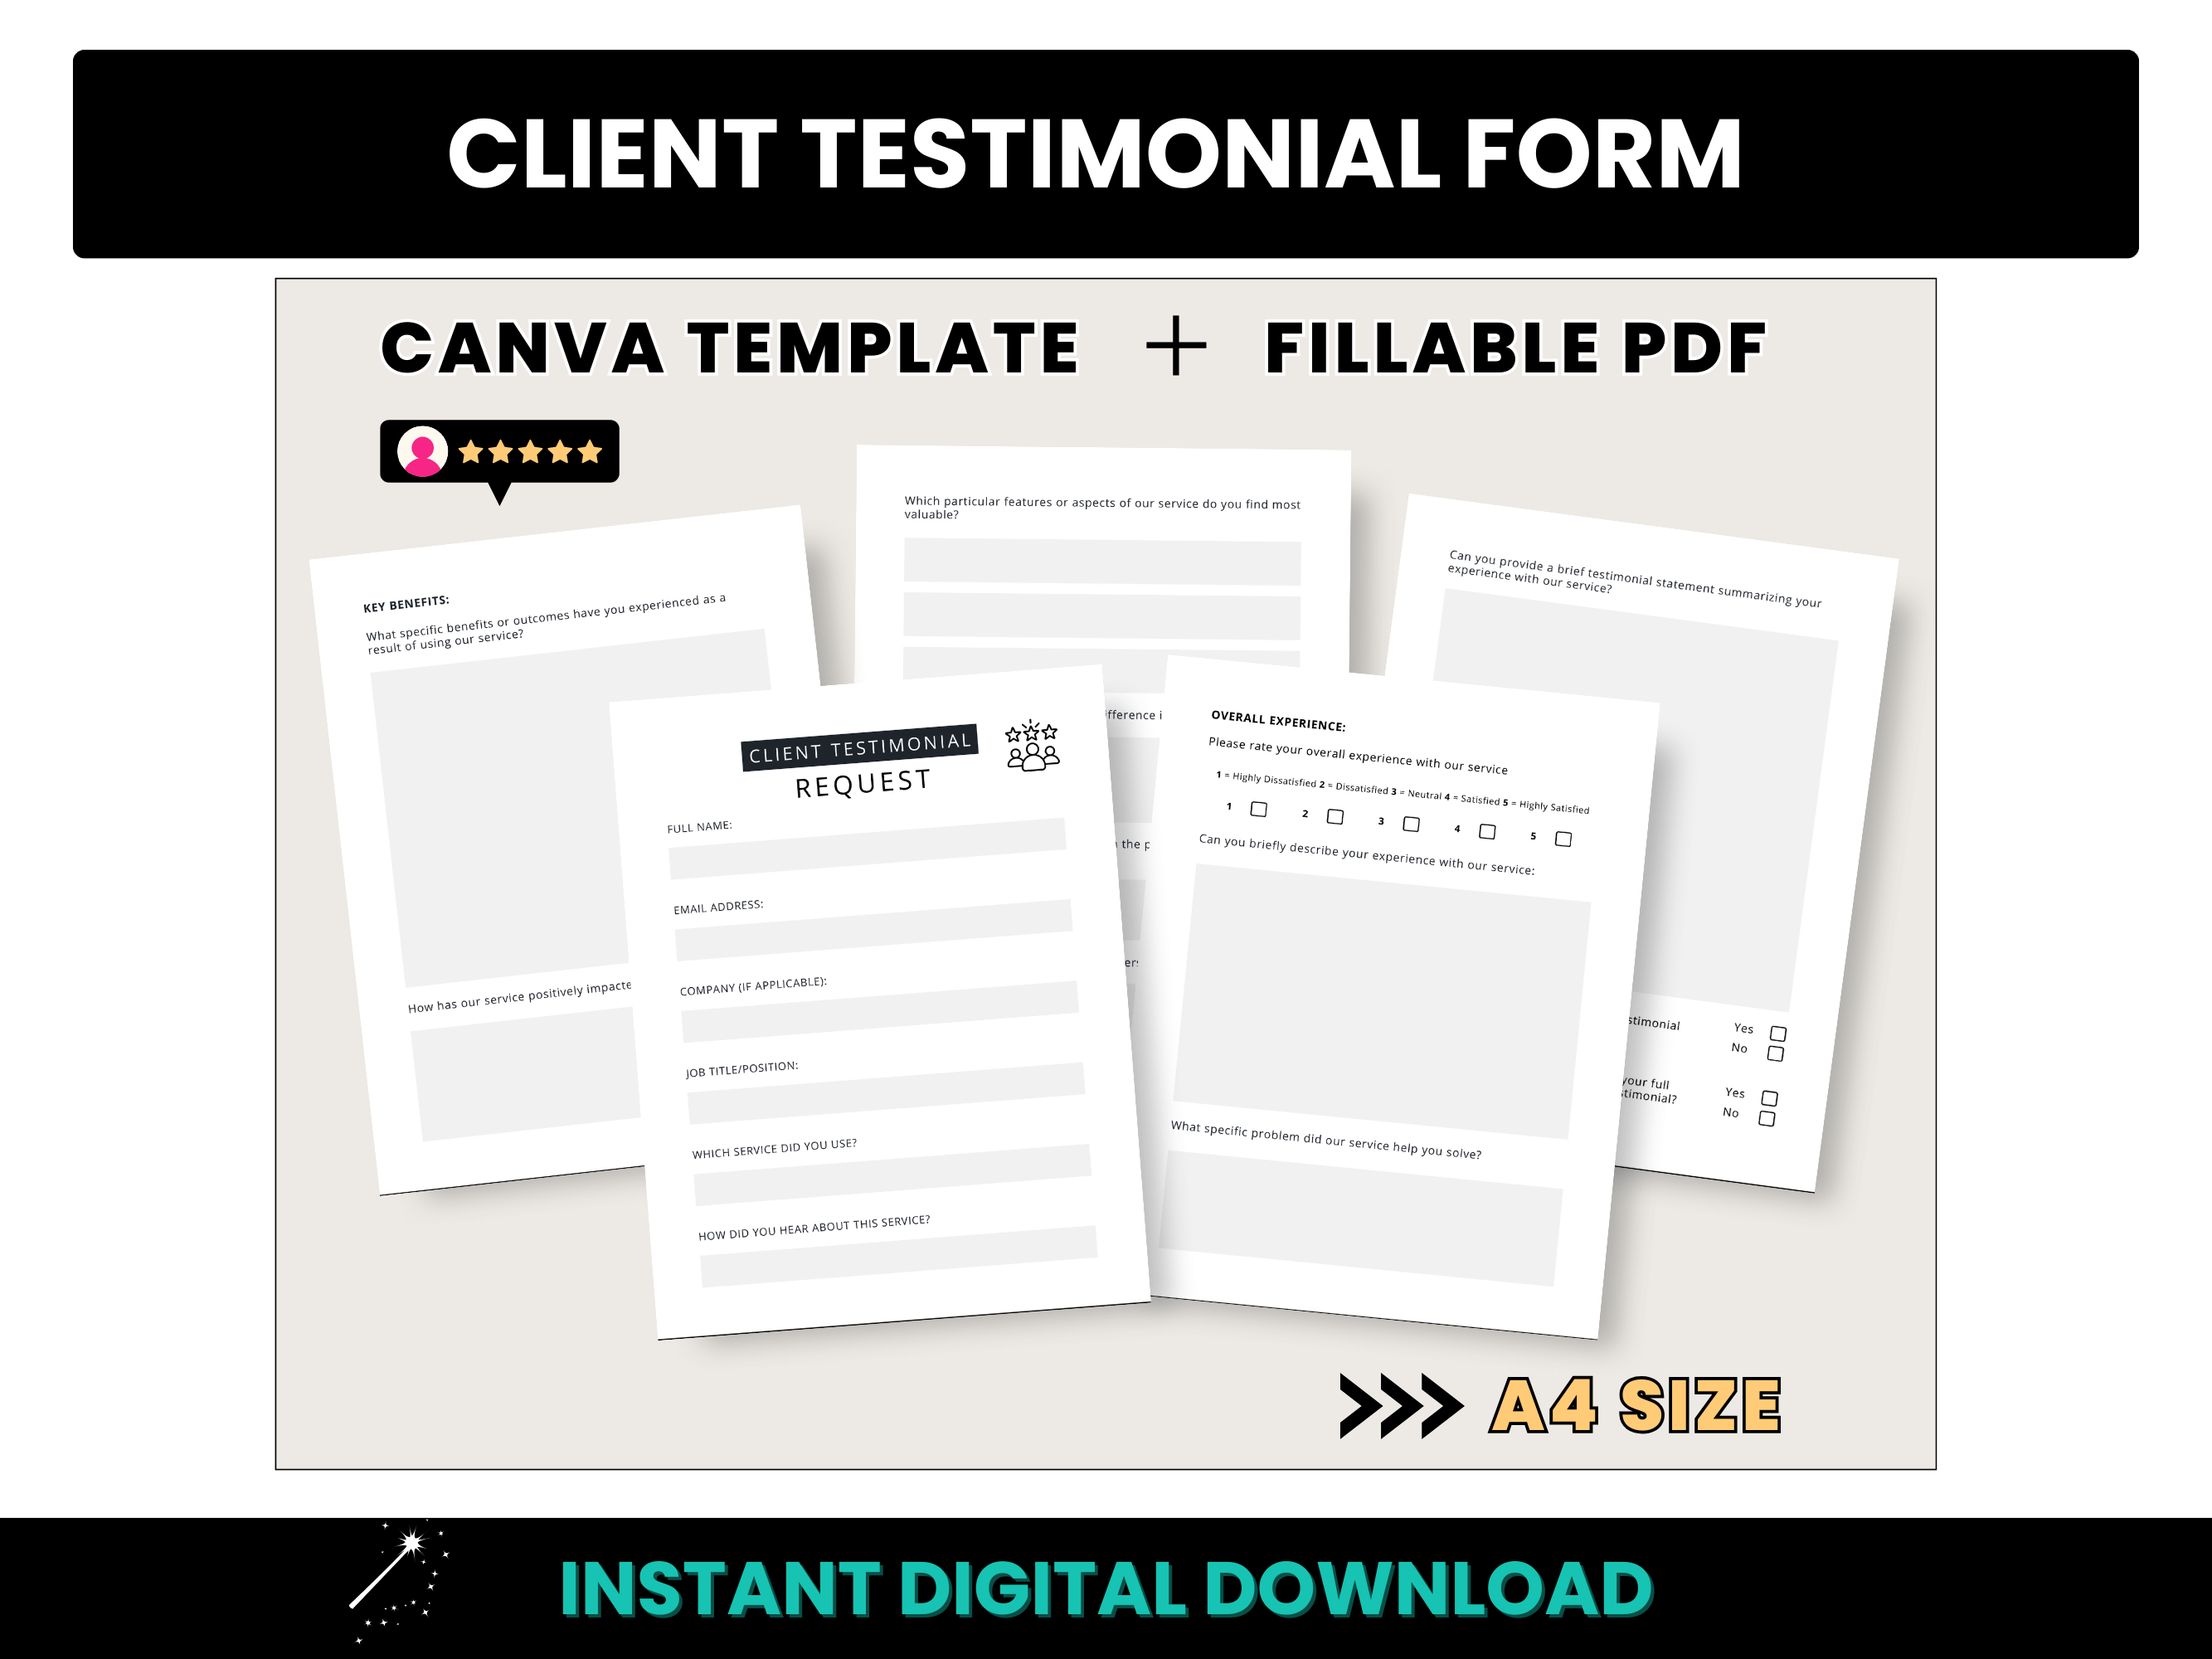 Client Testimonial Form - A4 Size